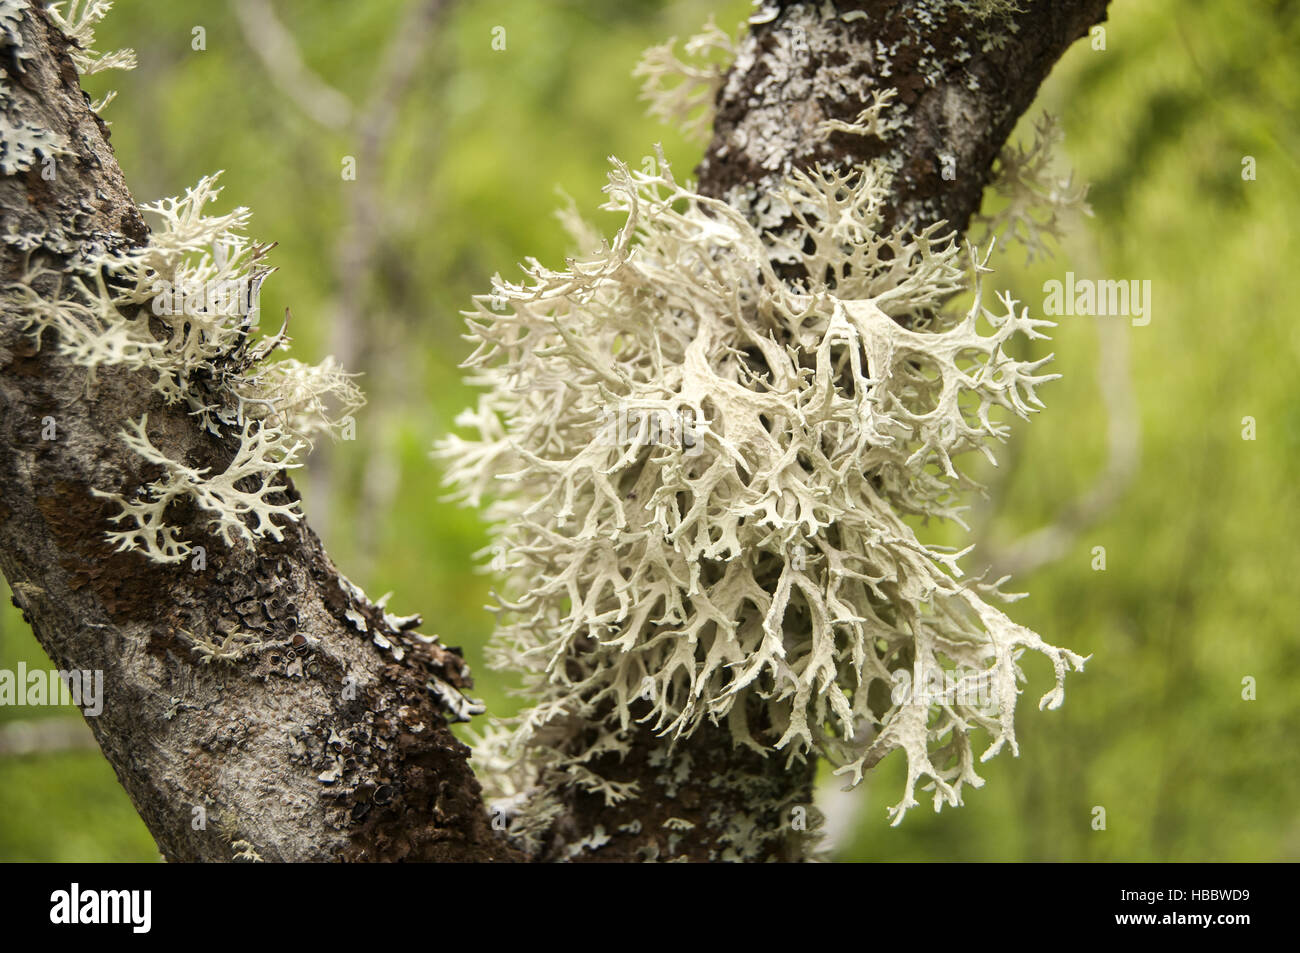 Iceland moss closeup Stock Photo